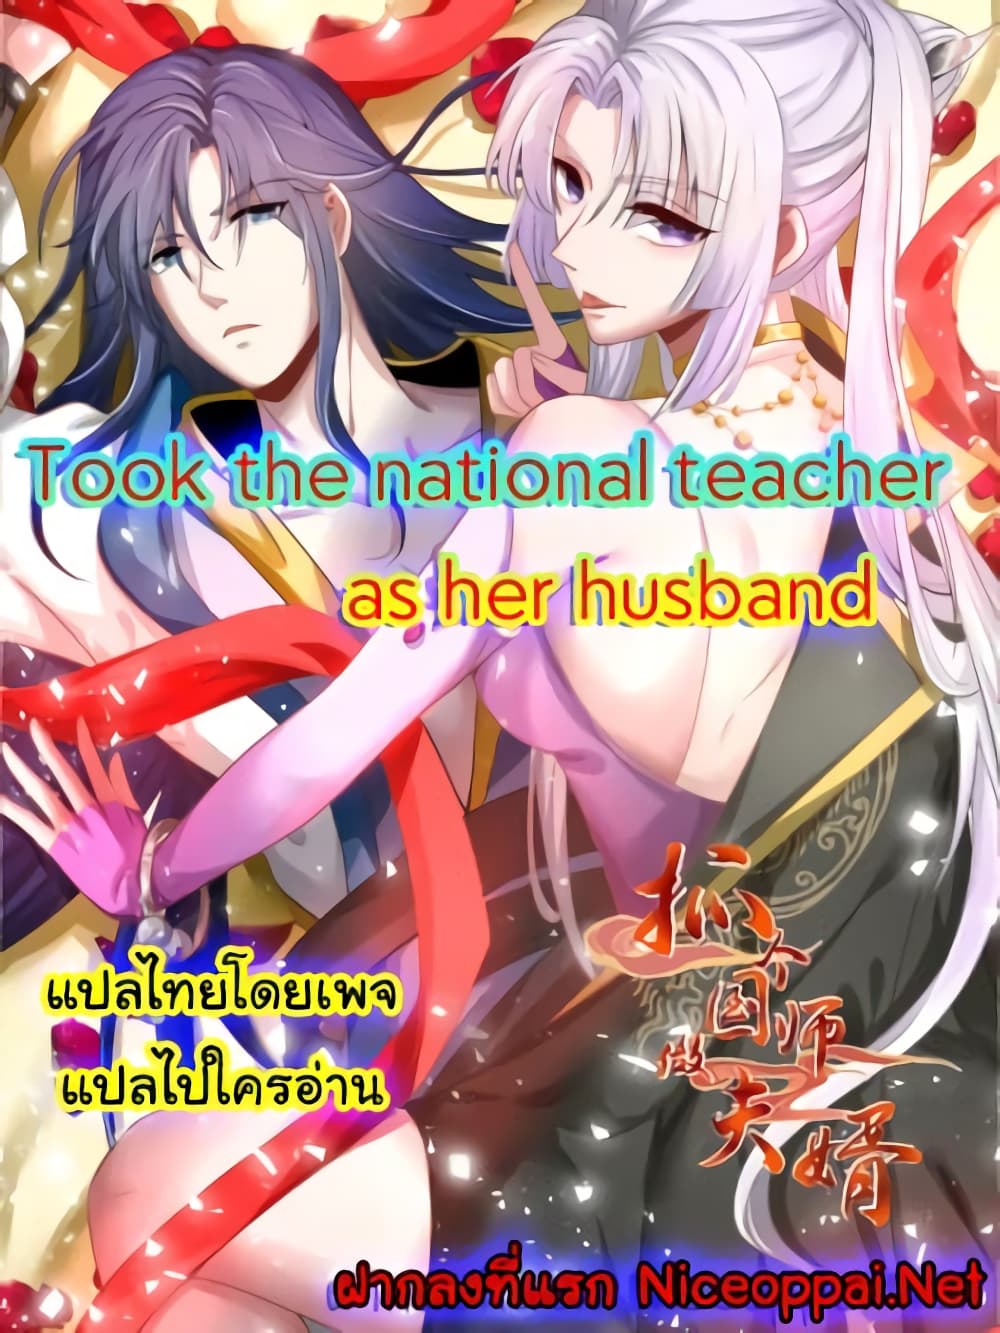 Took the National Teacher as Her Husband 33 (1)